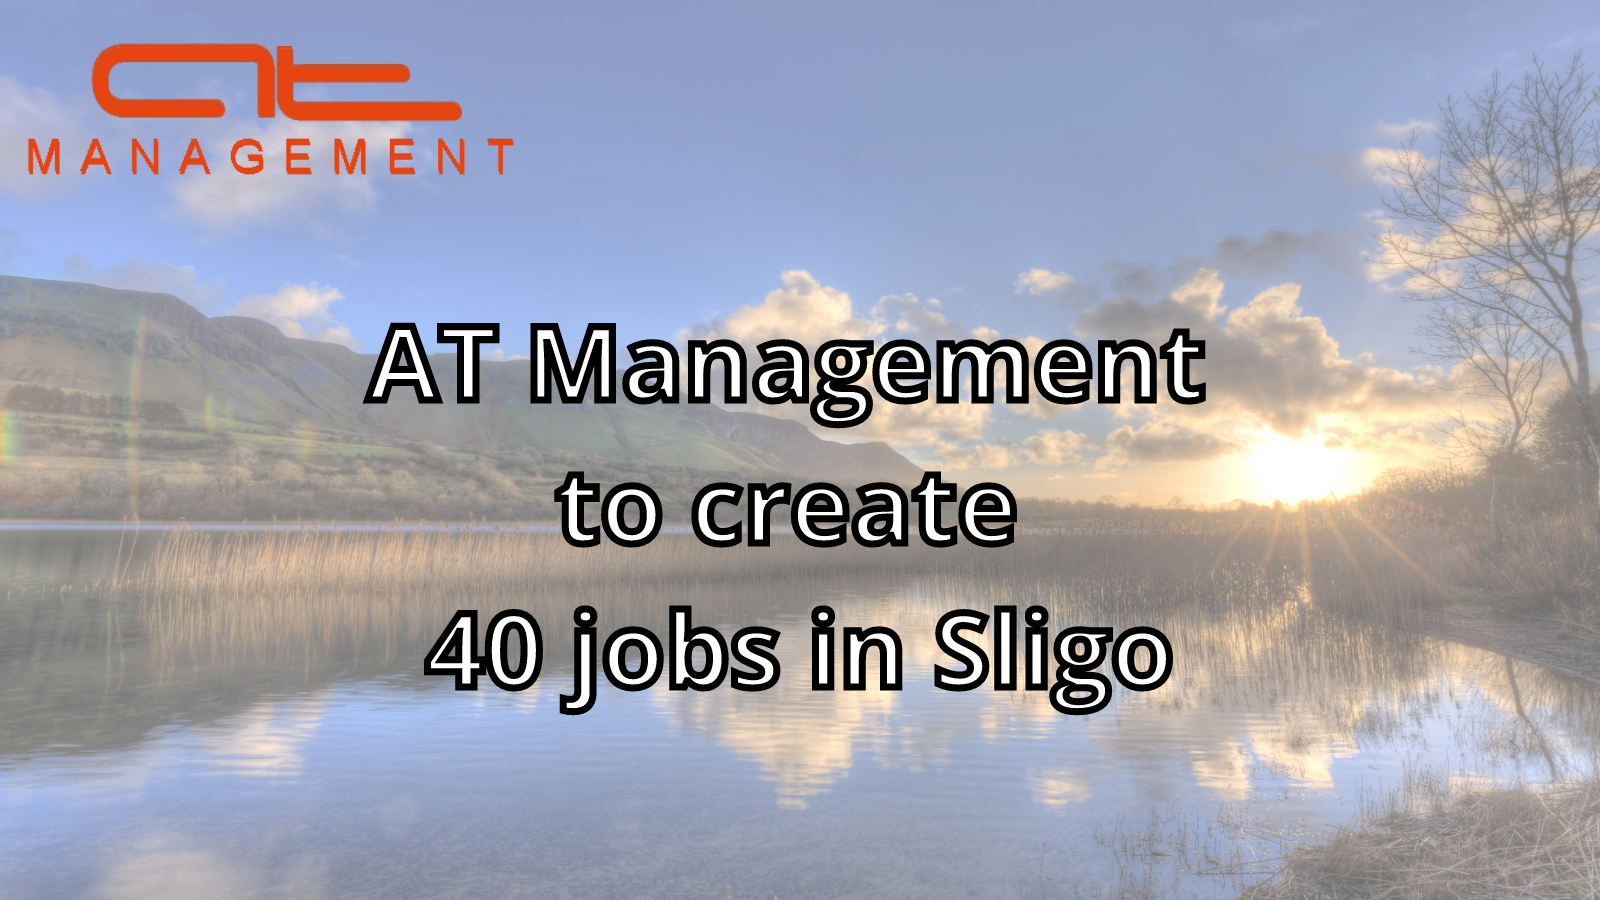 AT Management to create 40 jobs in Sligo